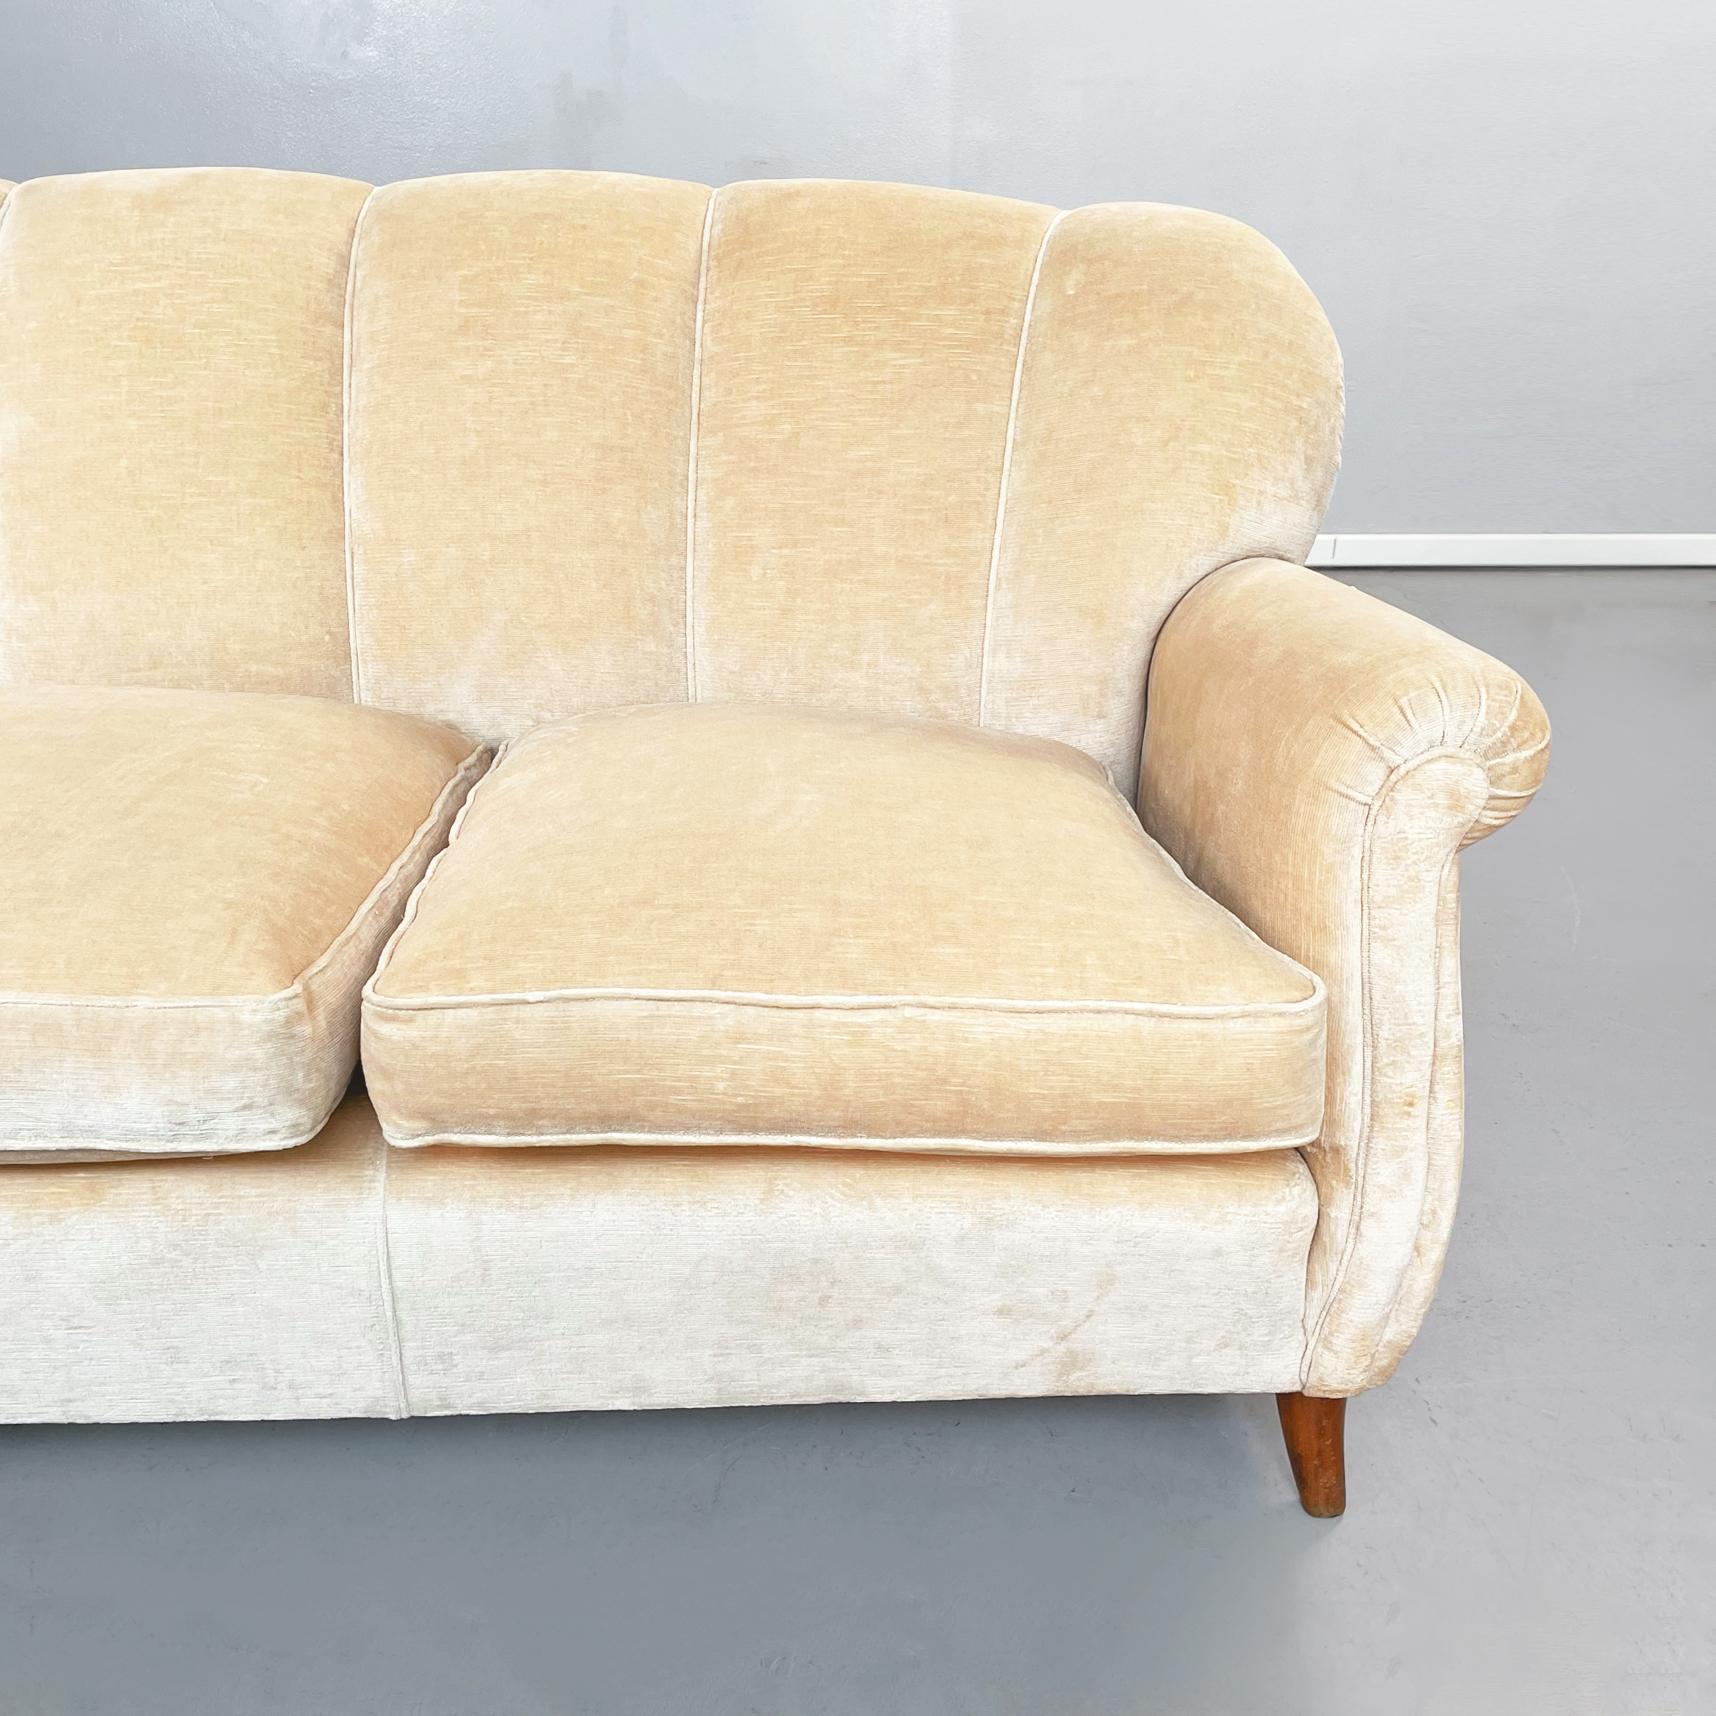 Italian Mid-Century Modern Wooden Sofa in Beige Fabric, 1960s For Sale 2